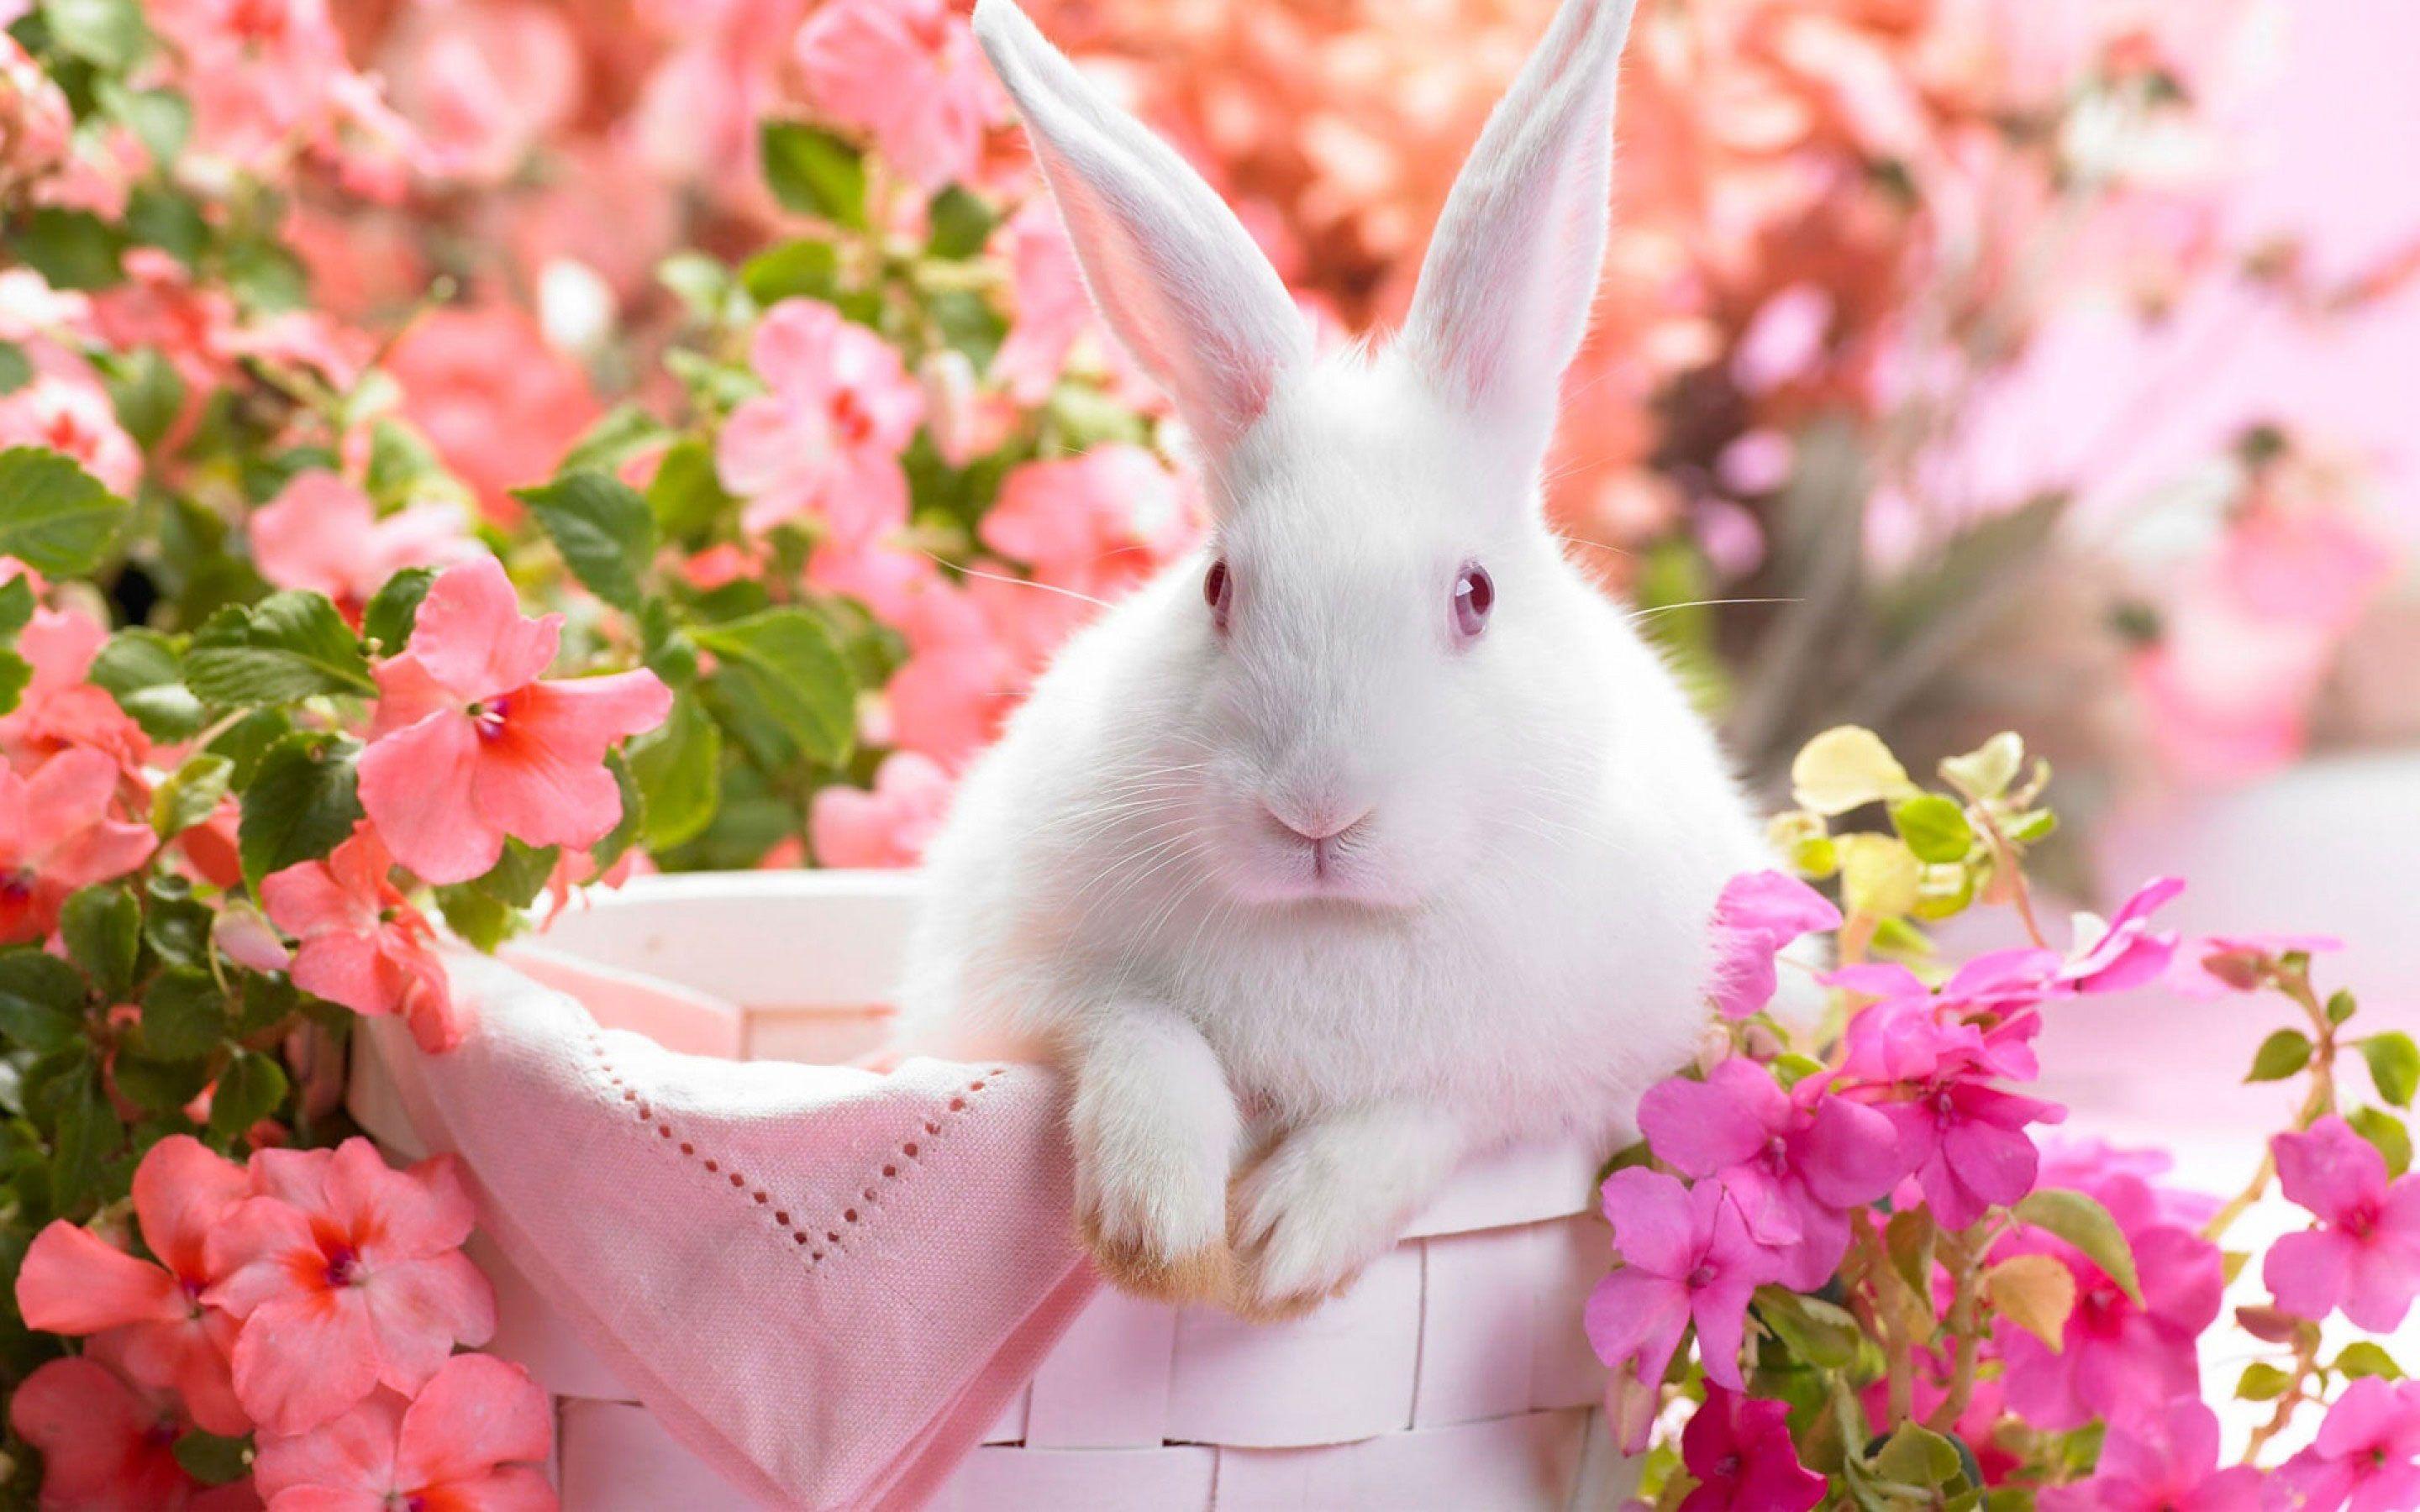 Rabbits Wallpaper, Full HD 1080p, Best HD Rabbits Pics, W.Web